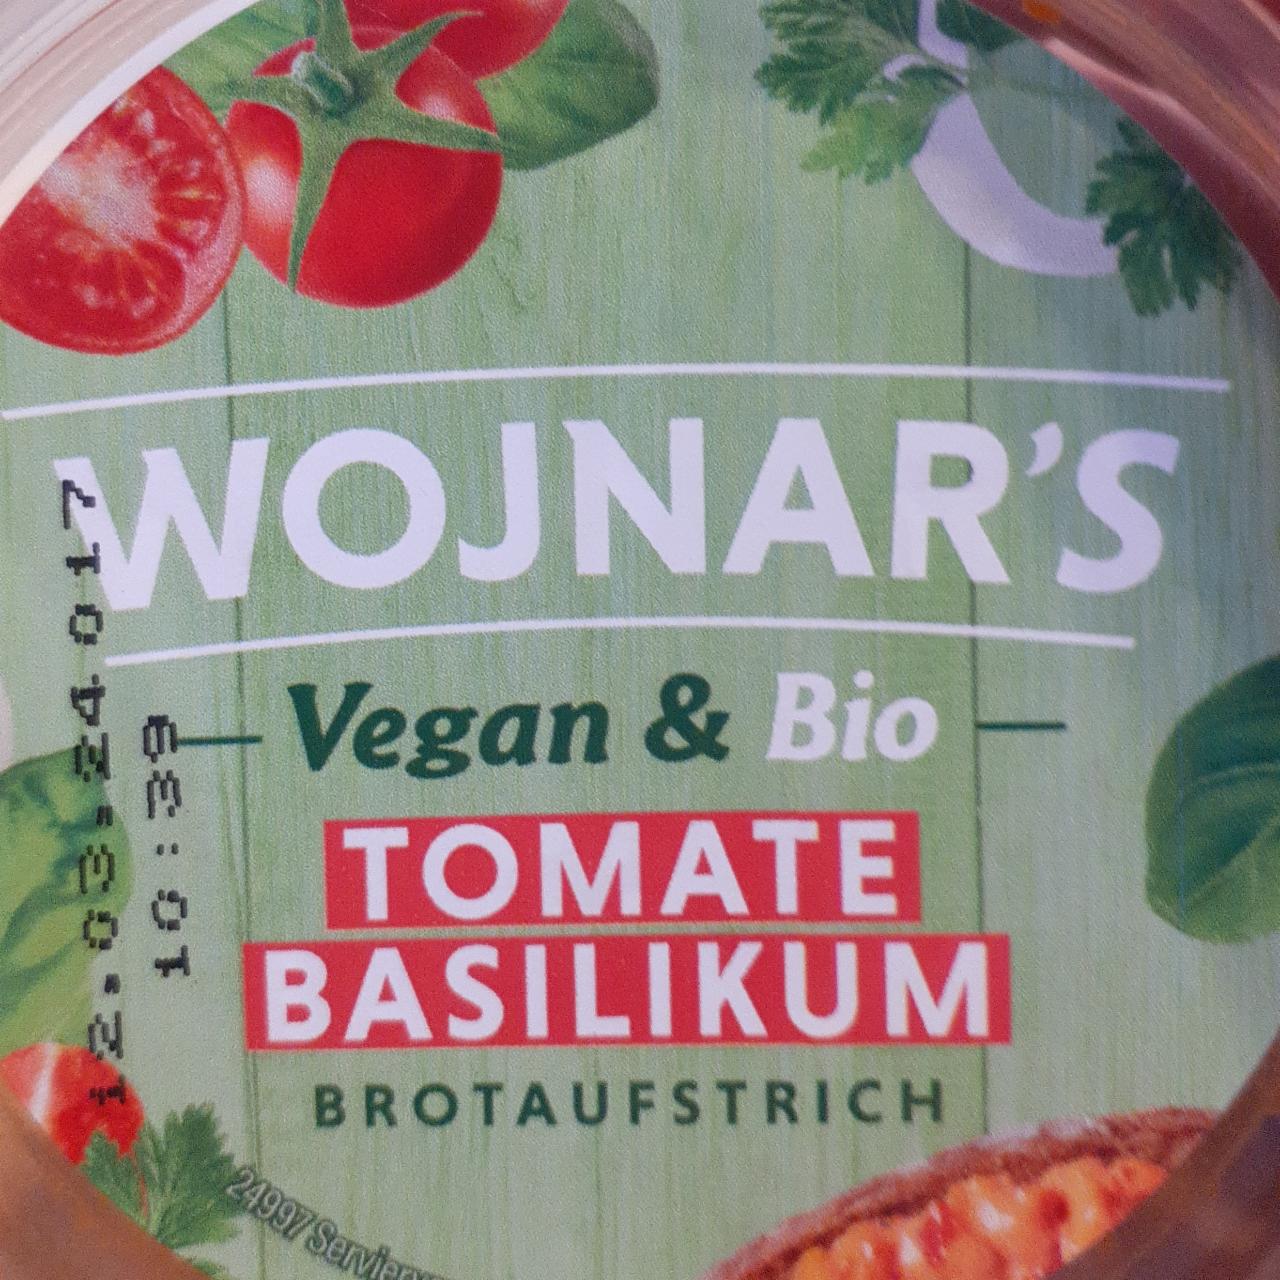 Fotografie - Vegan & Bio Tomate Basilikum Brotaufstrich Wojnar's